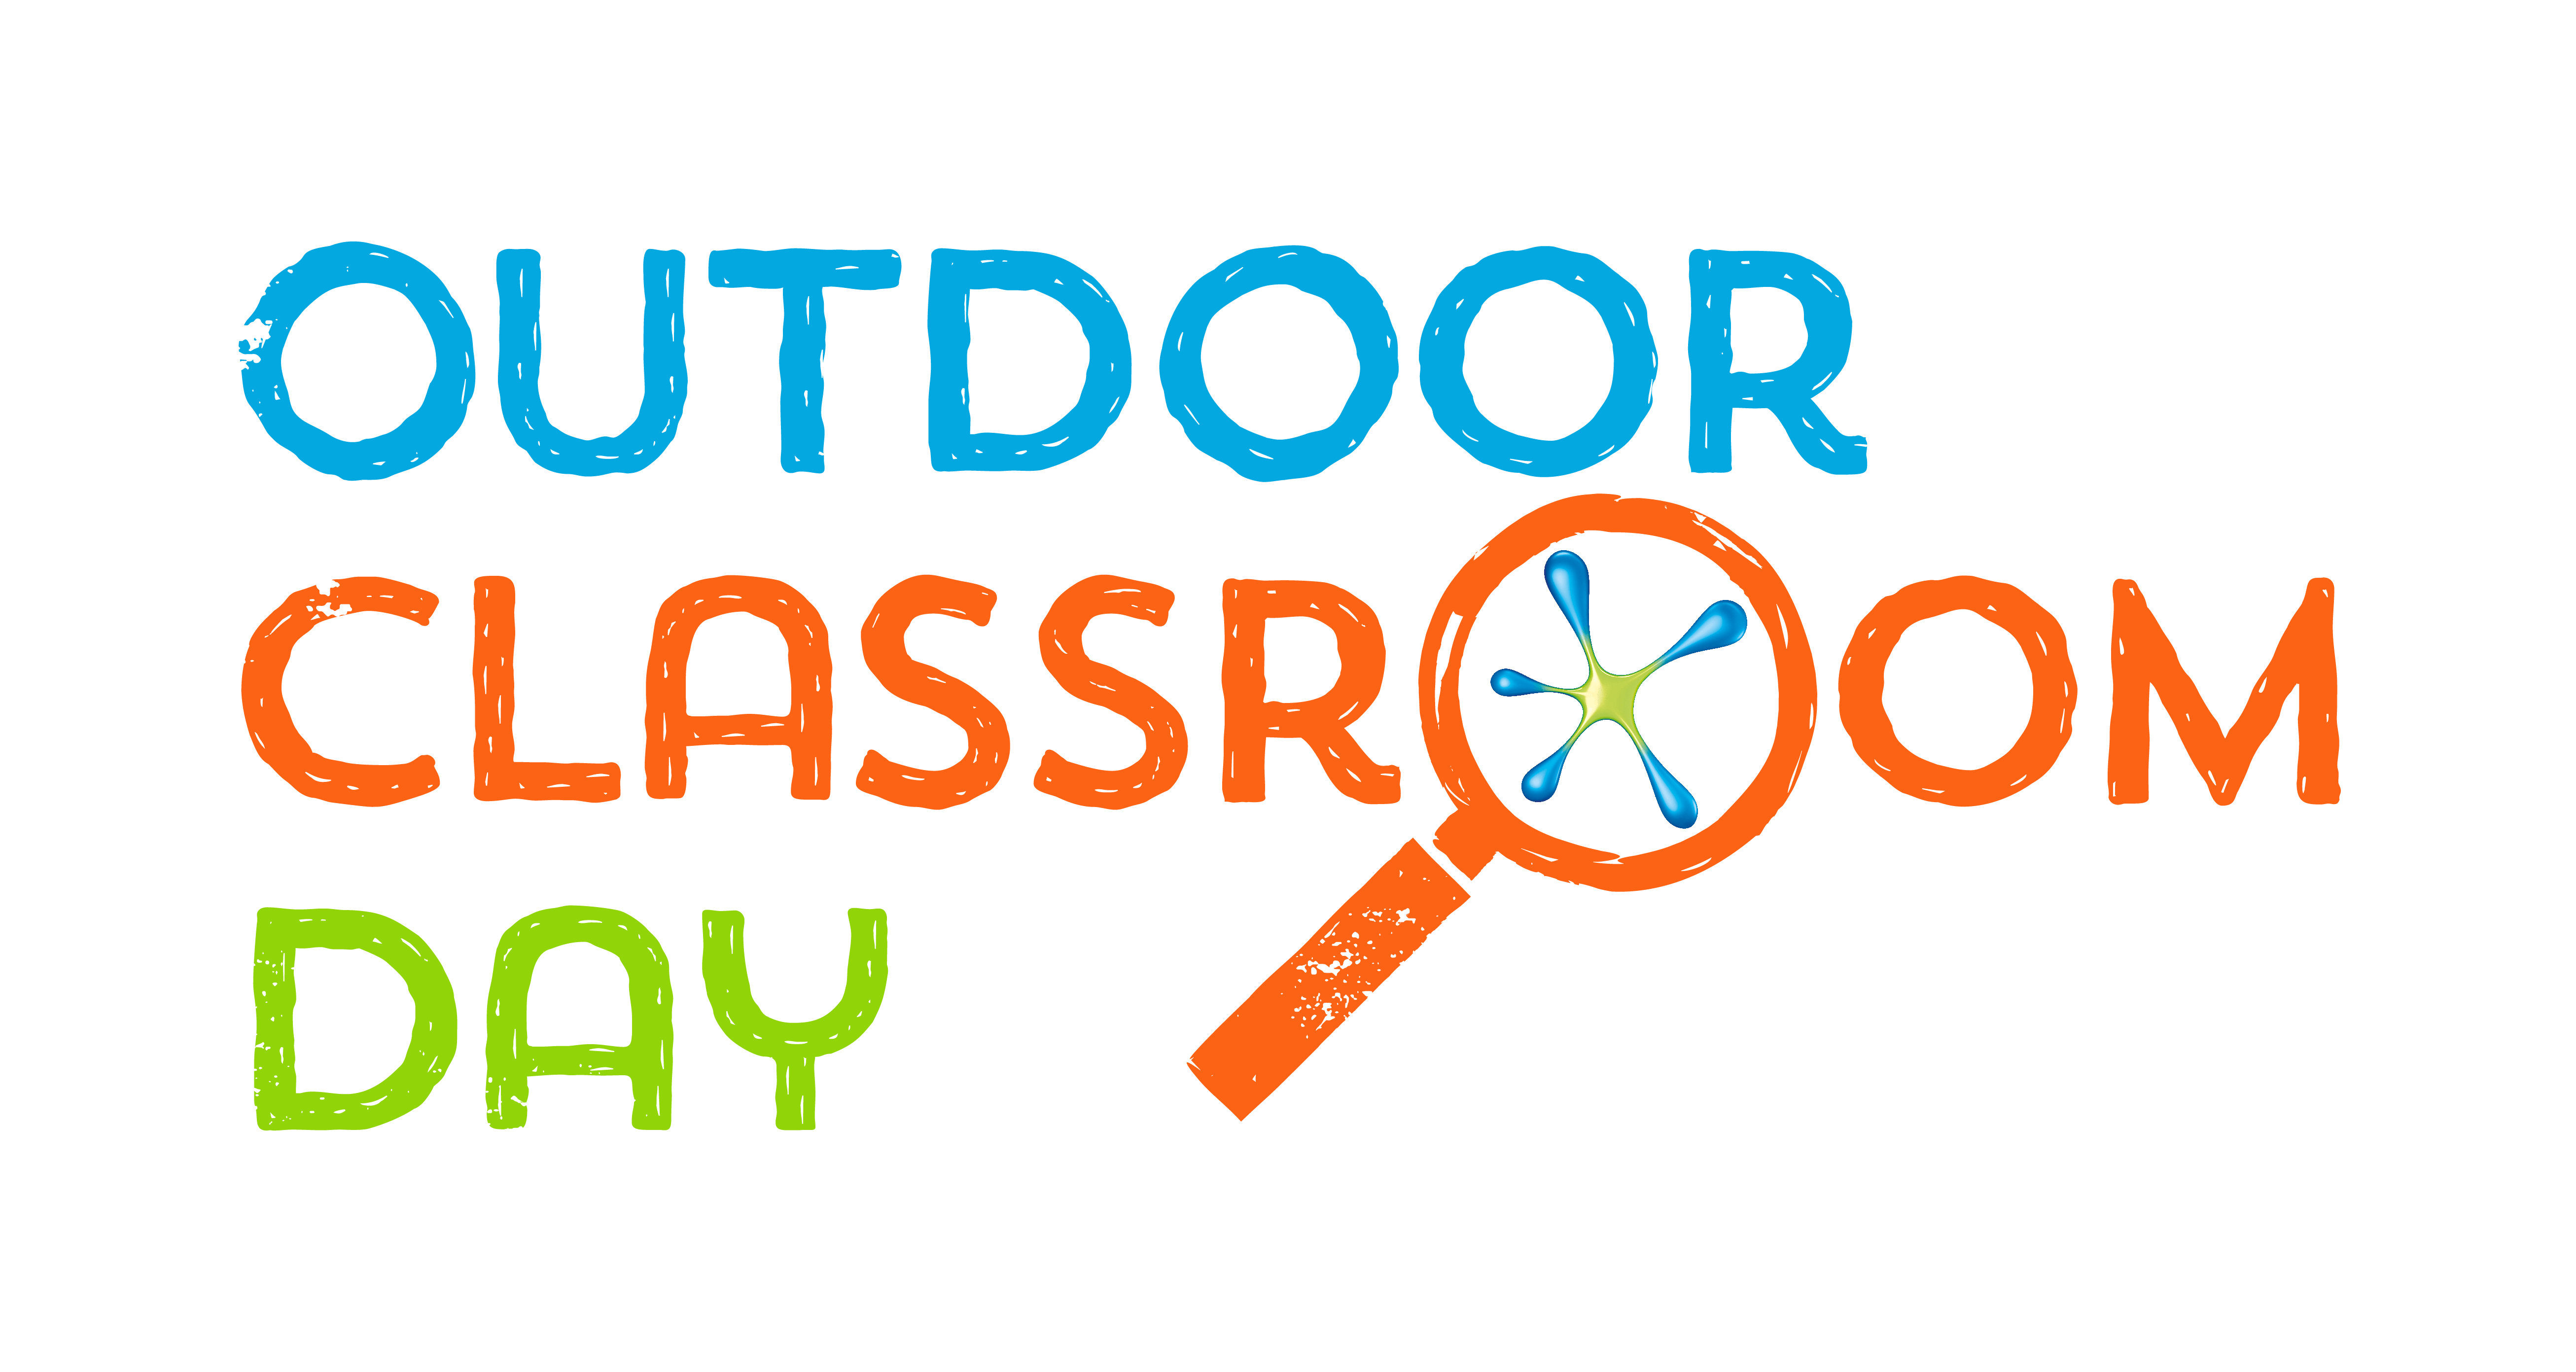 Classroom Logo - Outdoor Classroom Day colour logo — create your own materials for ...